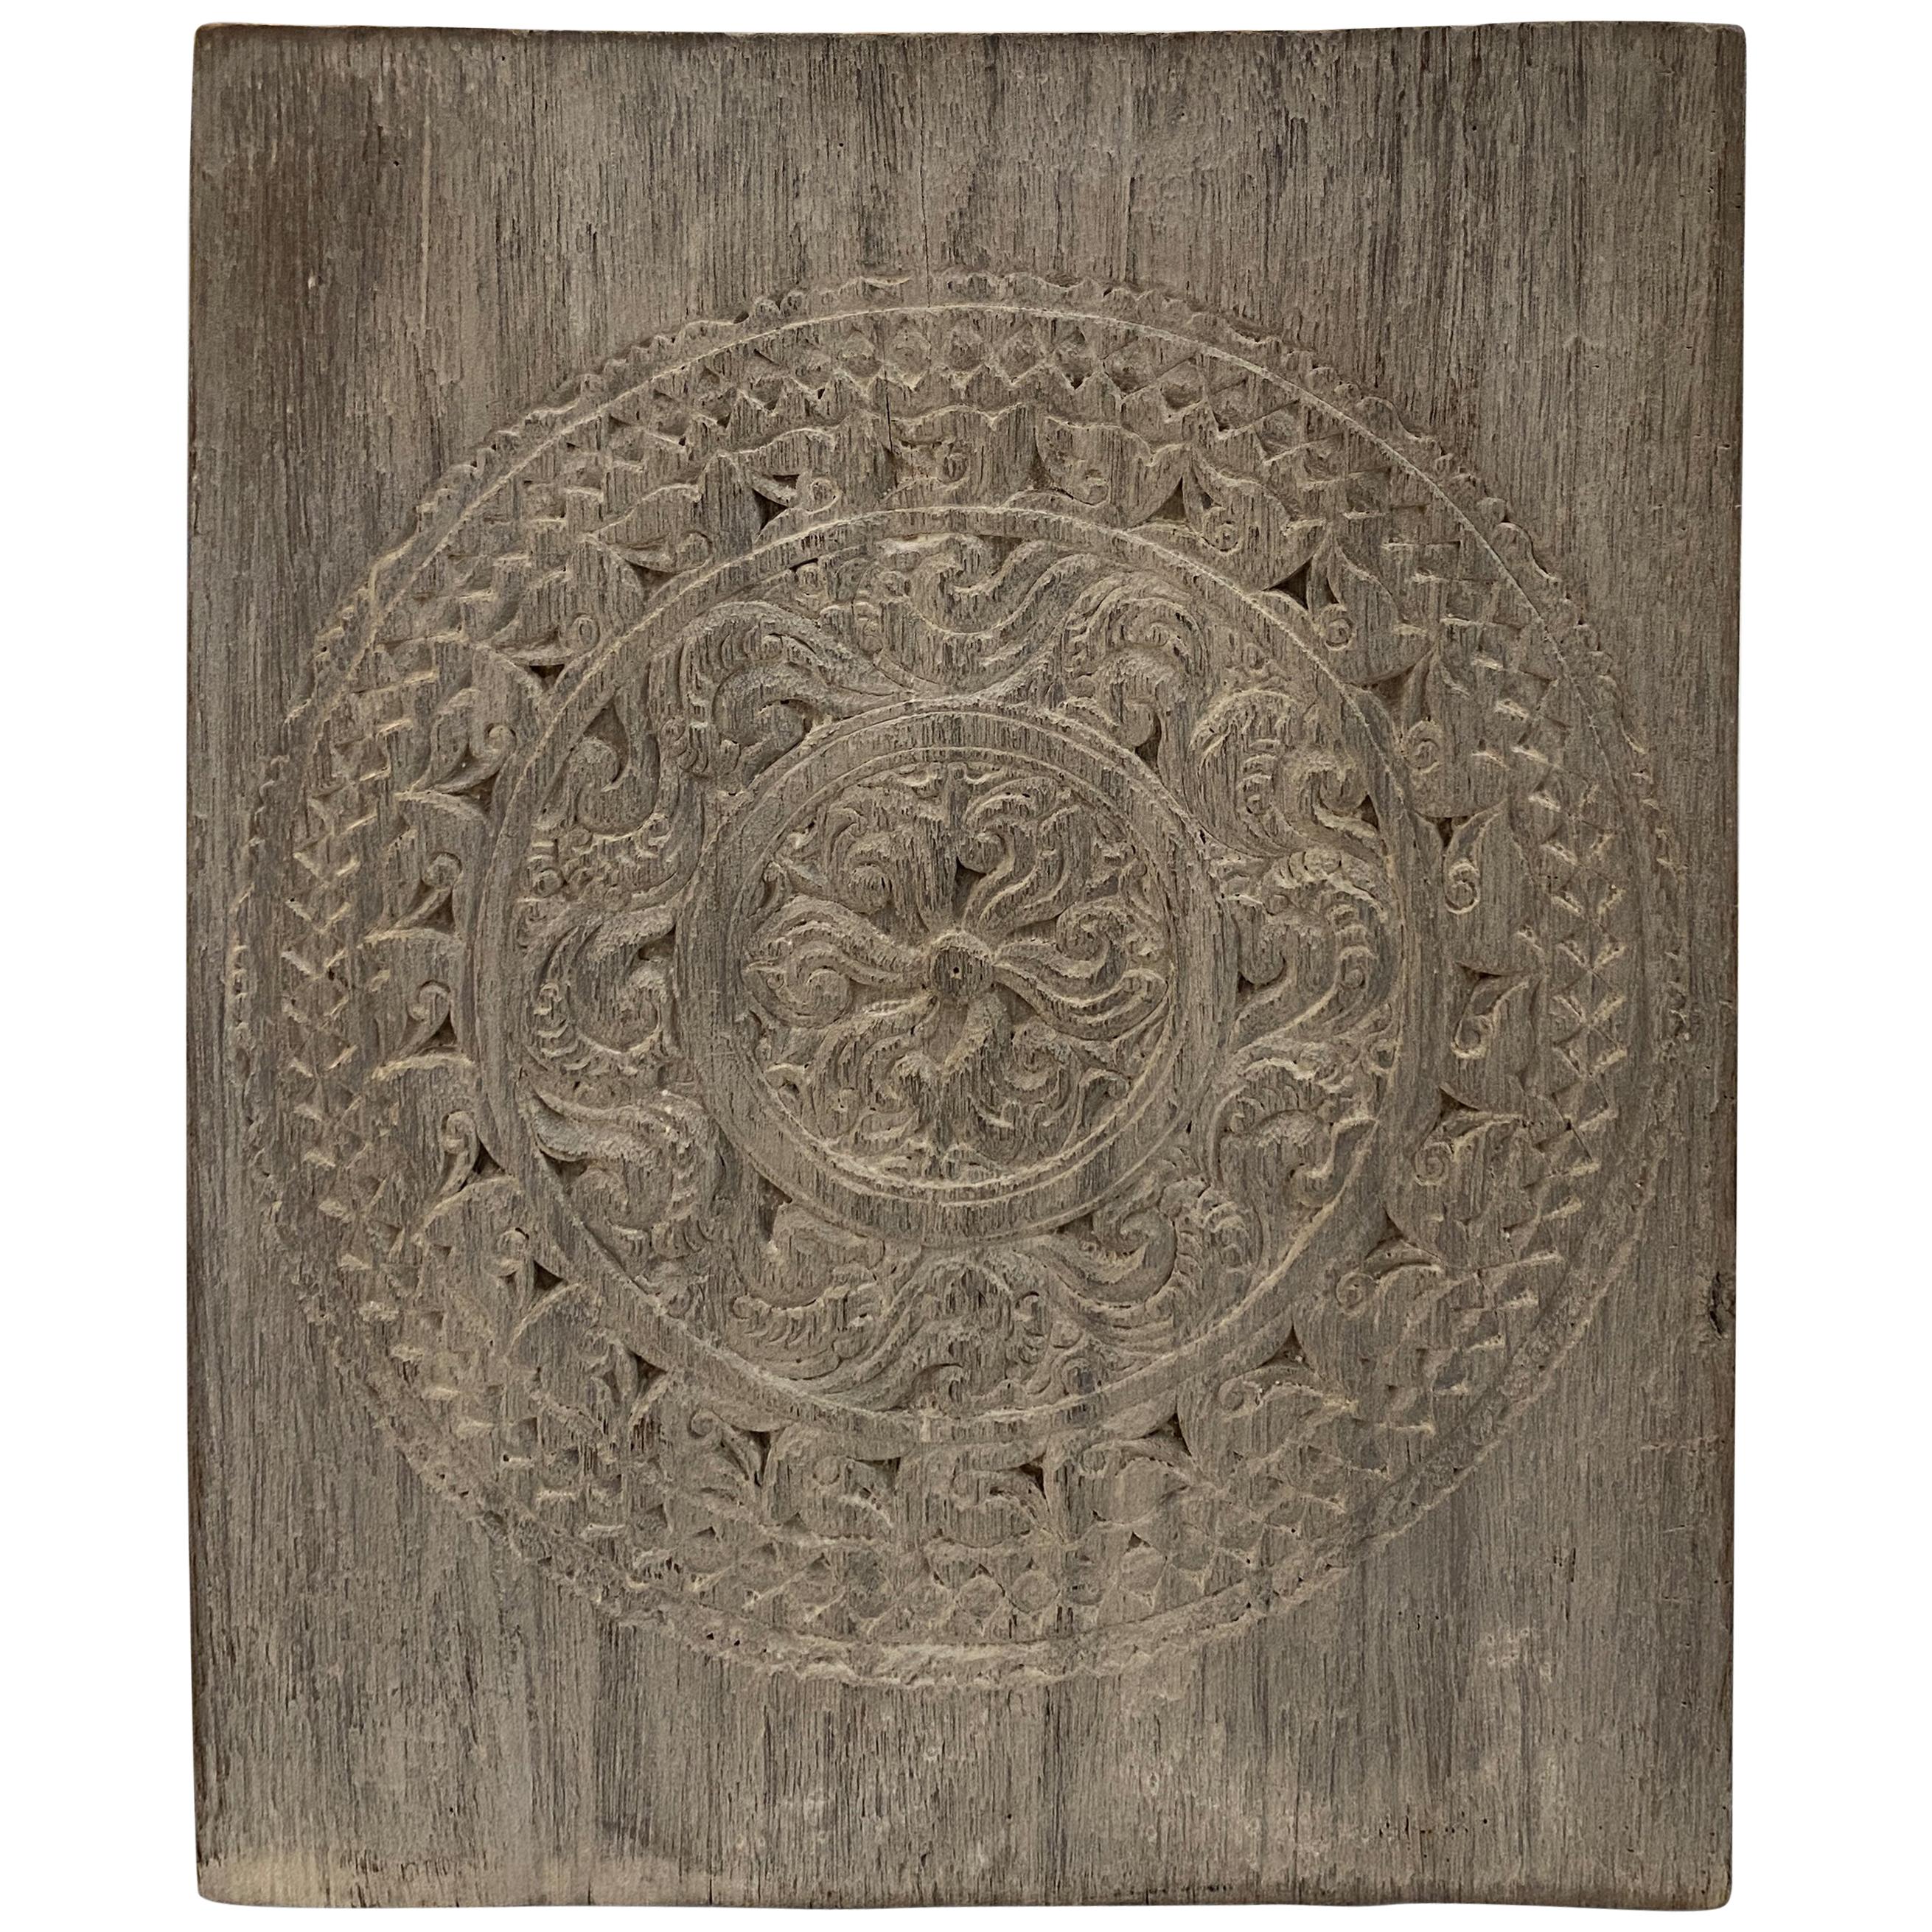 Andrianna Shamaris Antique Carved Teak Wood Panel